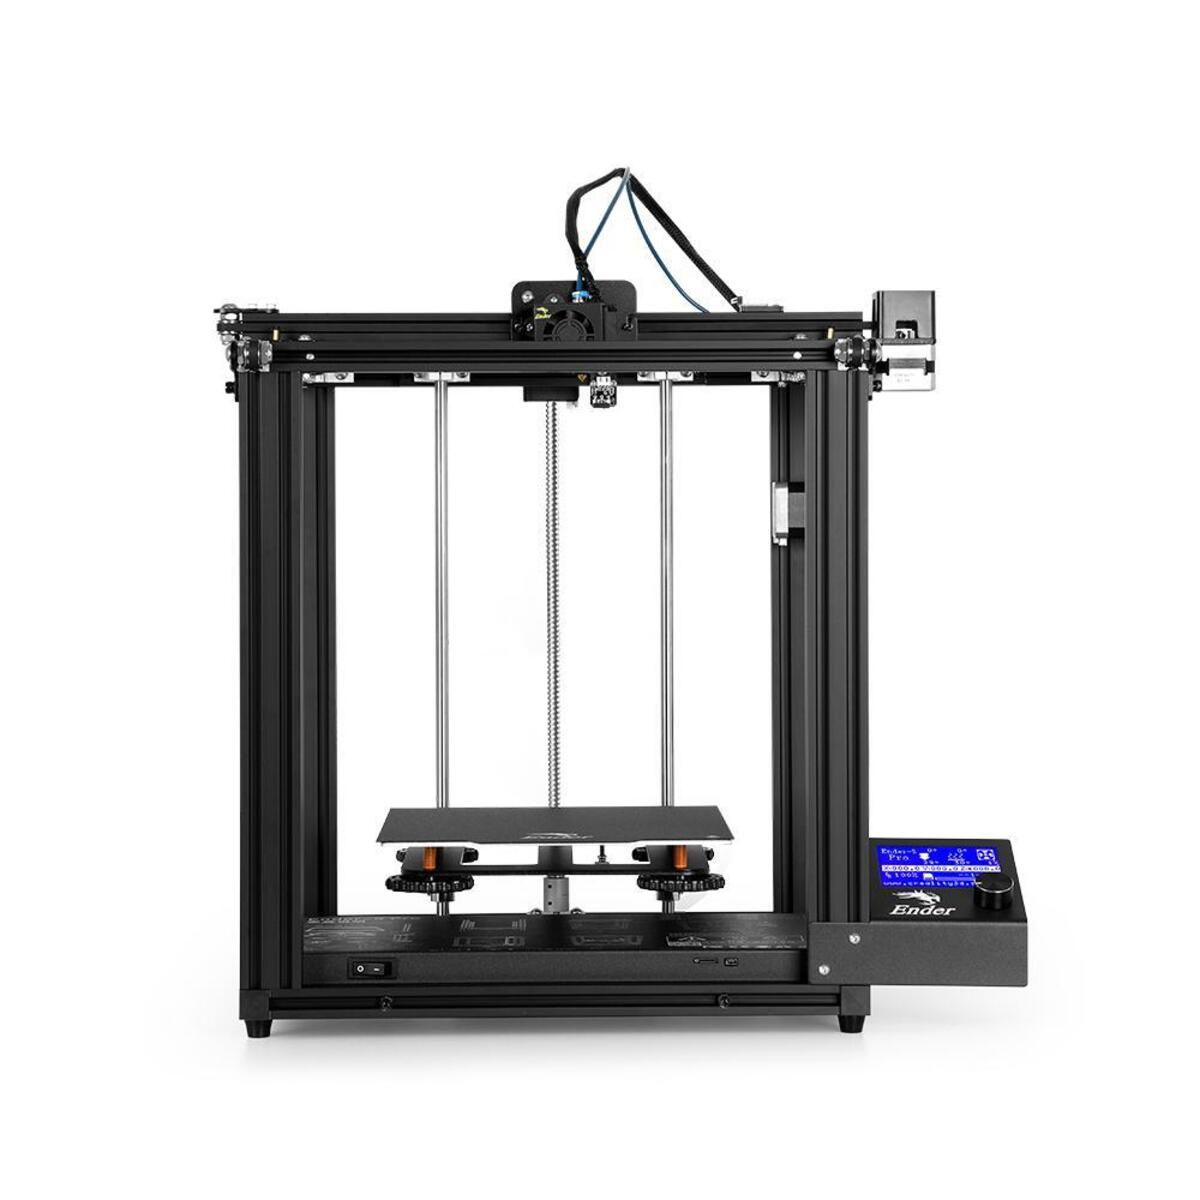 - FDM 3D 220x220x300 Creality Ender 5 Drucker Pro CREALITY 3D bouwvolume printer